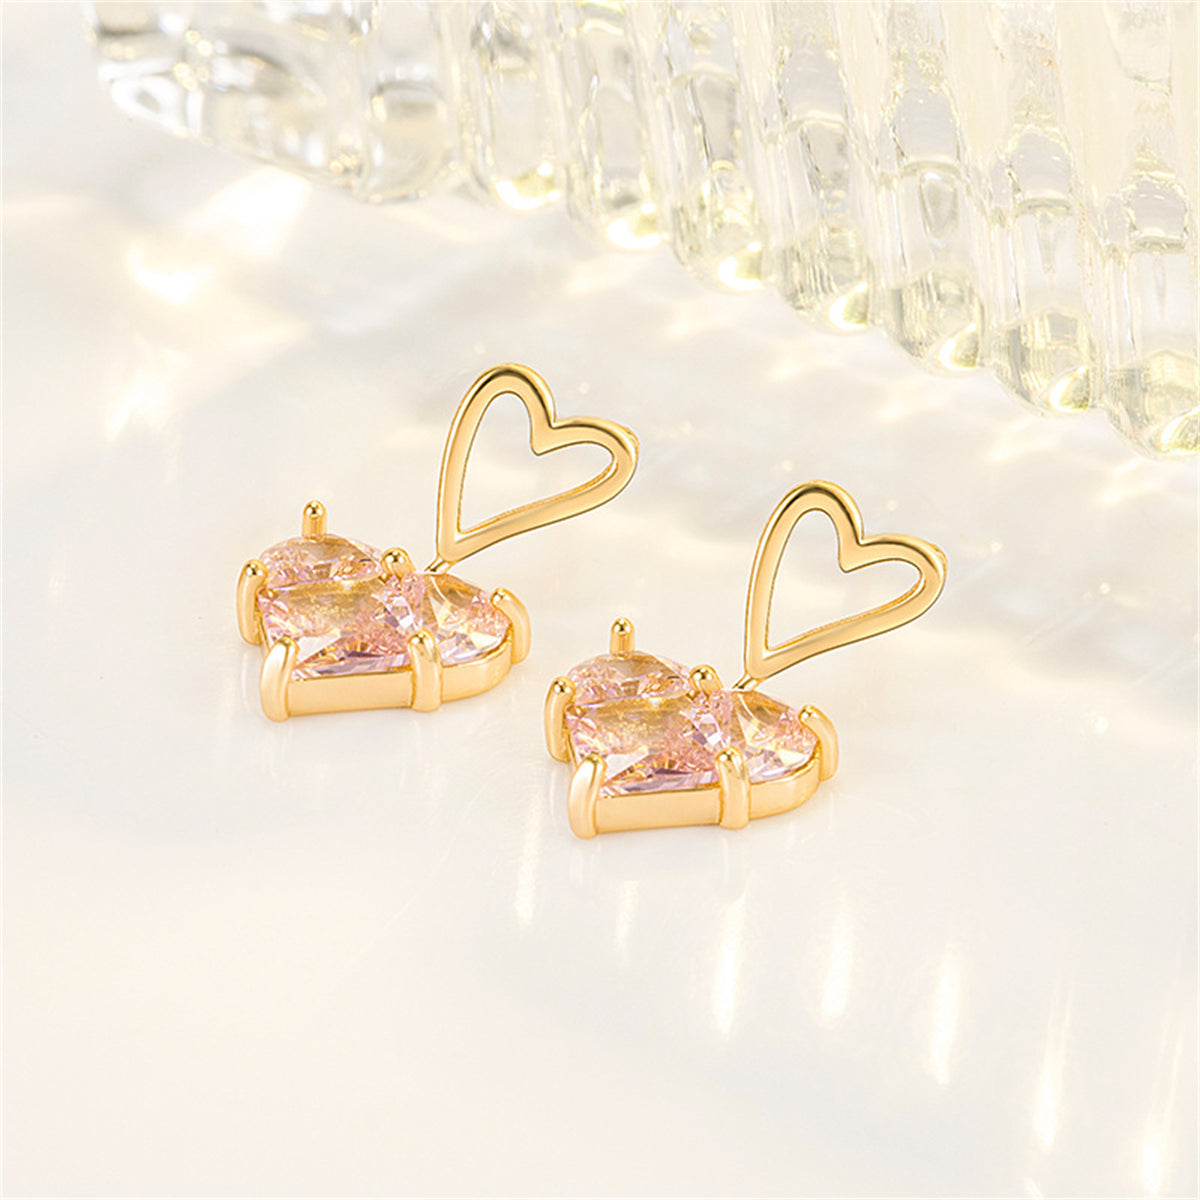 Crystal & 18K Gold-Plated Openwork Heart Drop Earrings